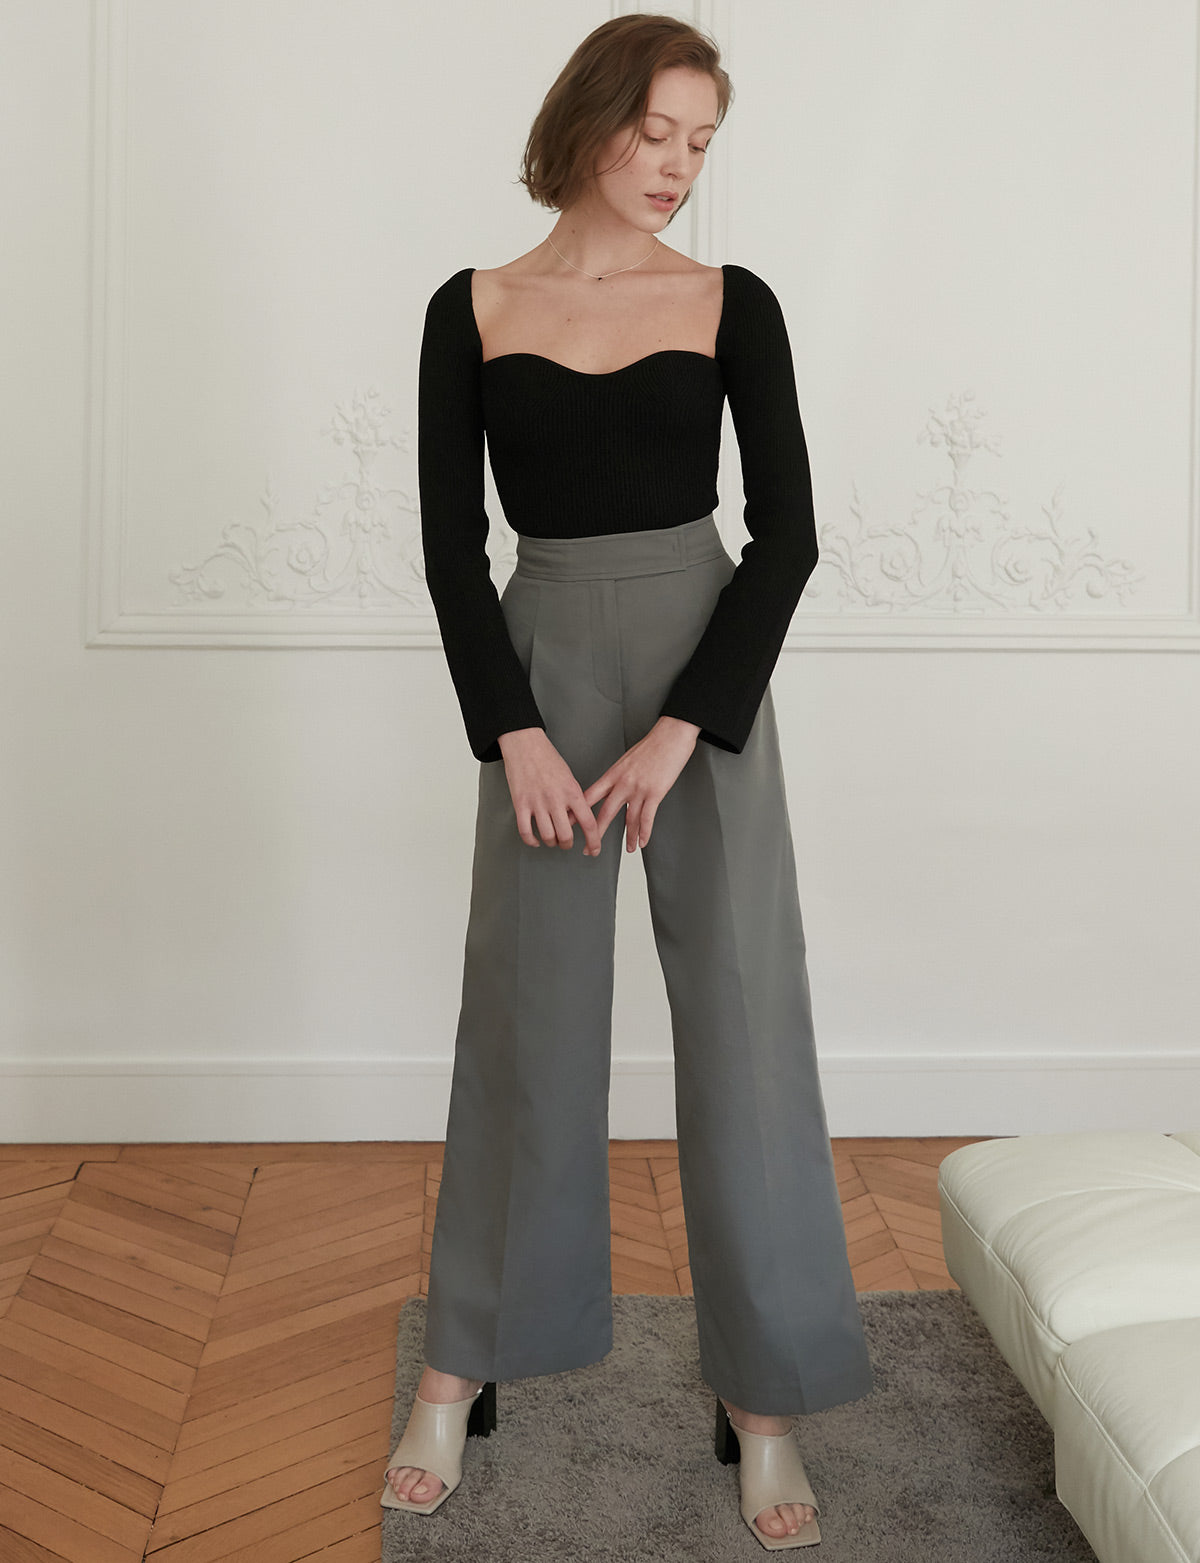 Chiara Knit Bustier Top in Black-BESTSELLER